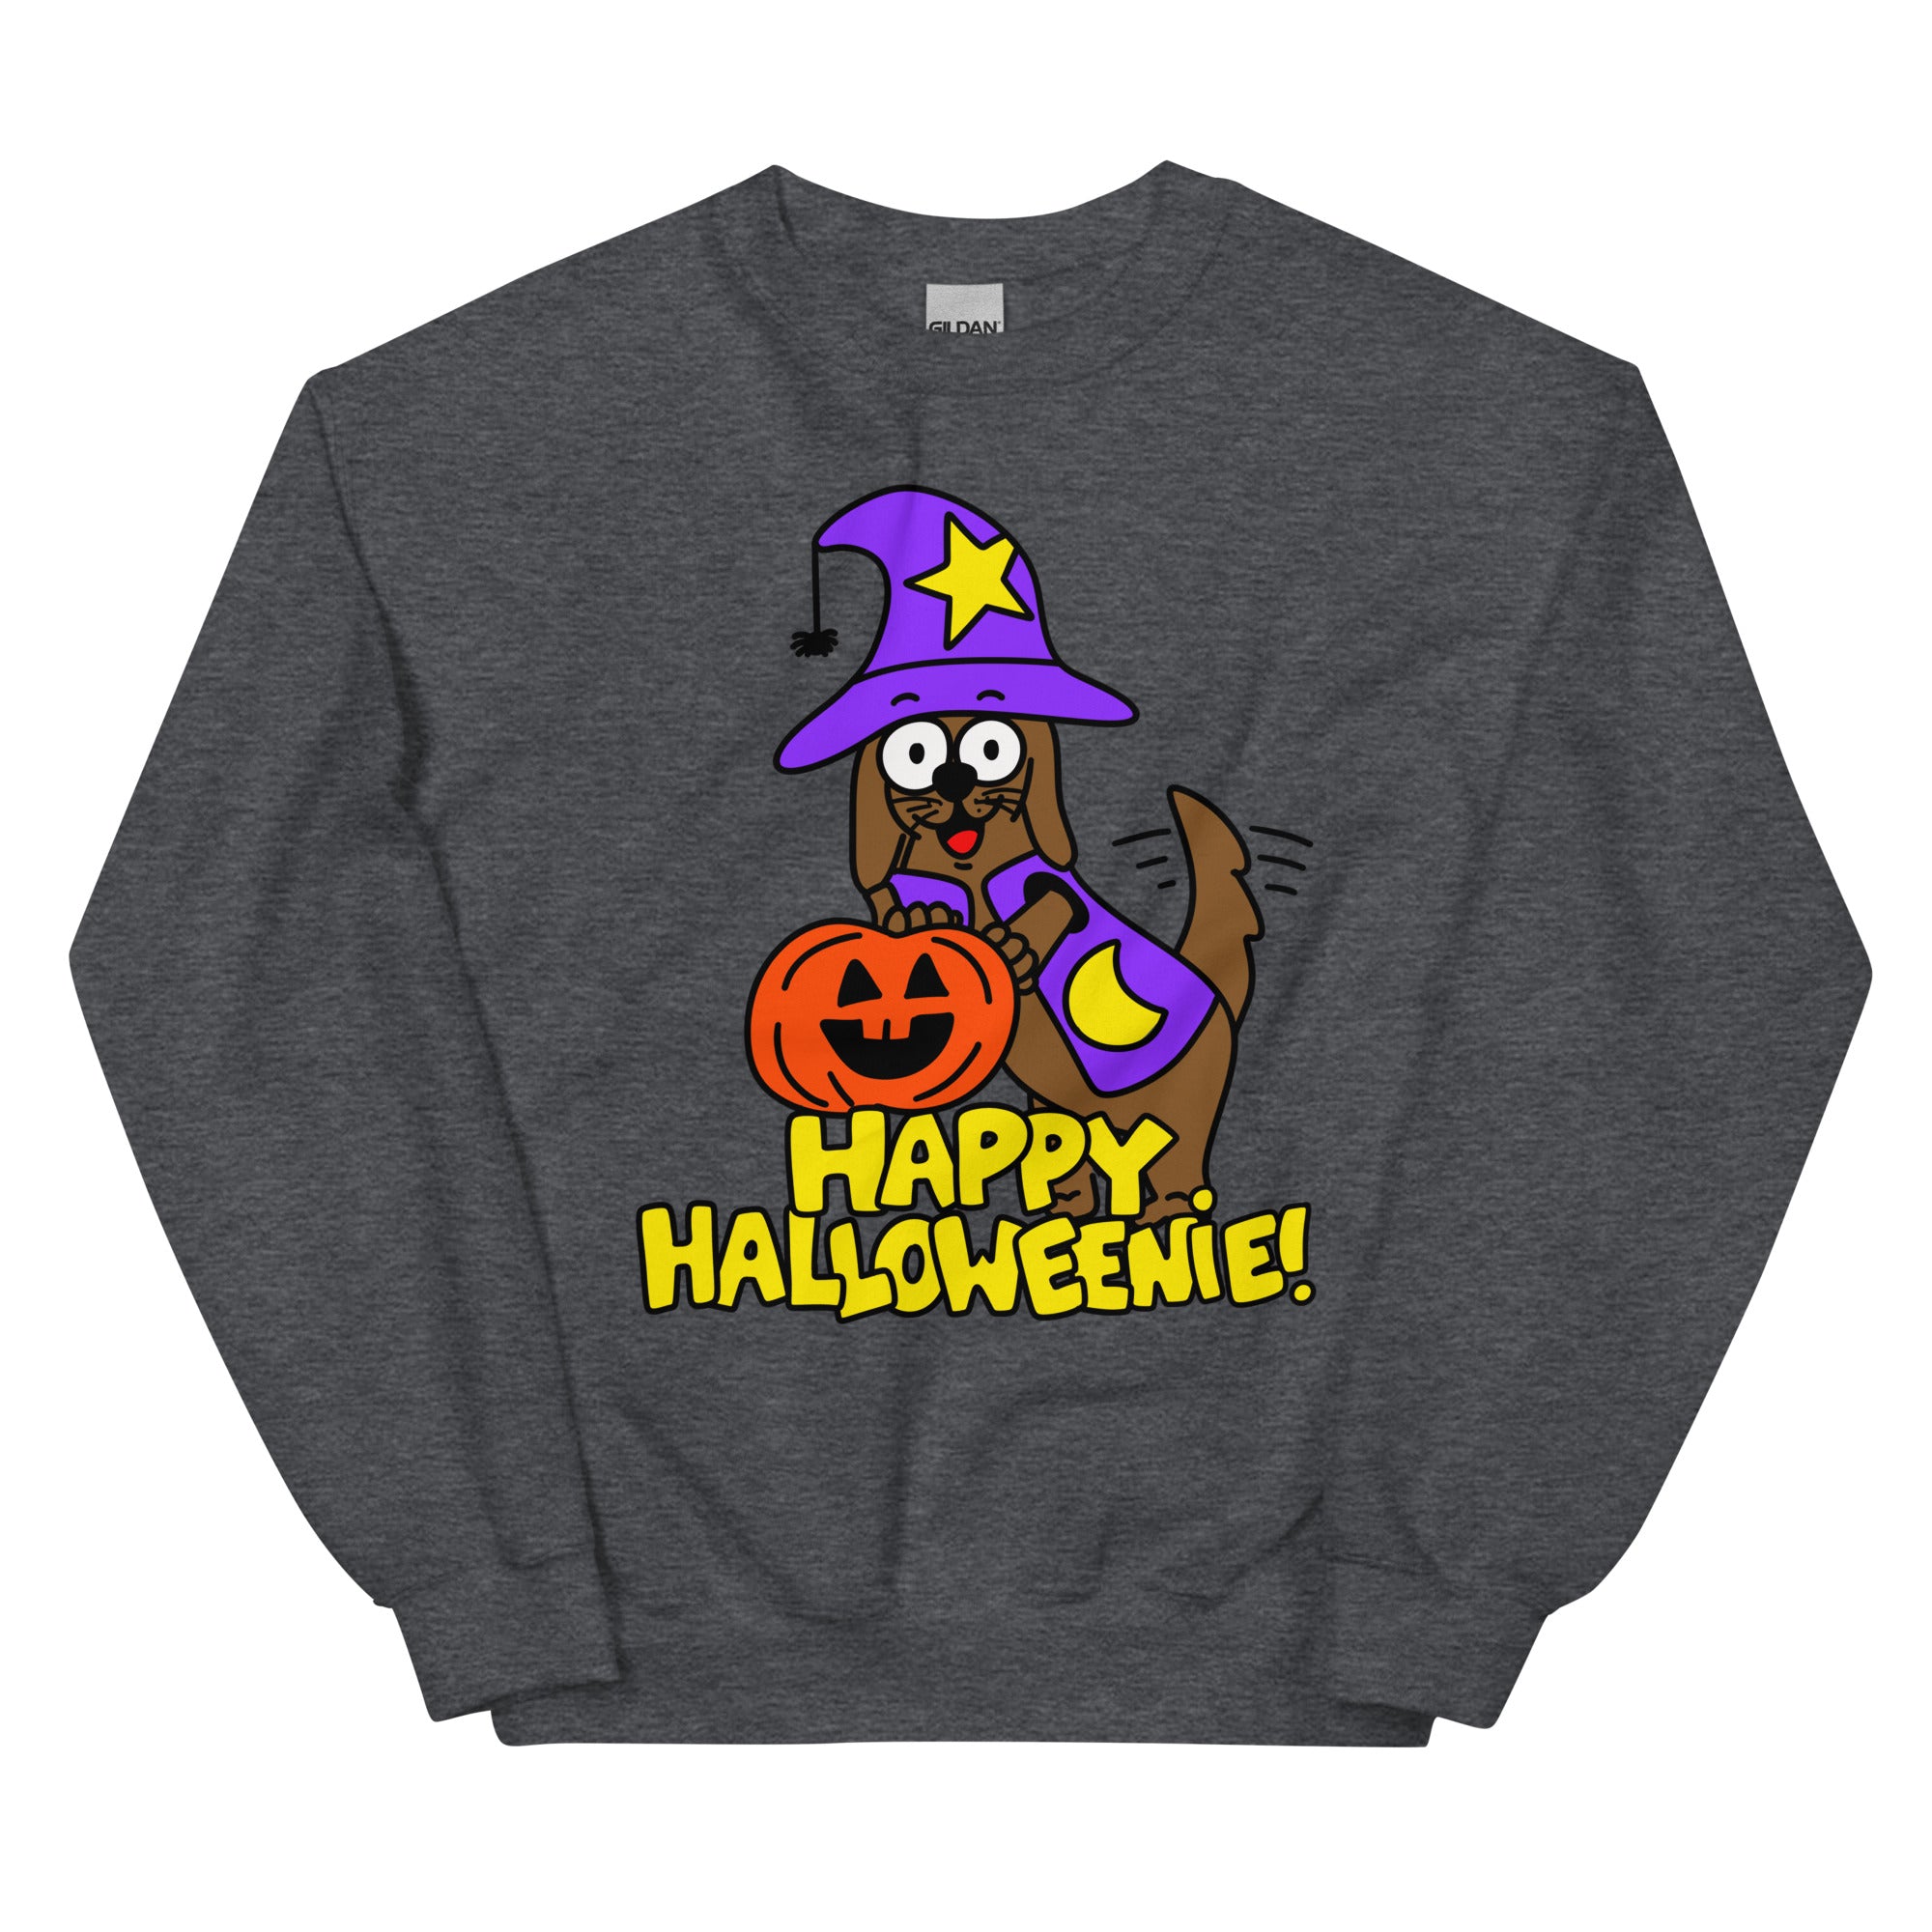 Dachshund Halloween tshirt for Doxie lover, Weiner dog halloween gift for dachshund owner shirt for dog lover Happy Halloweenie